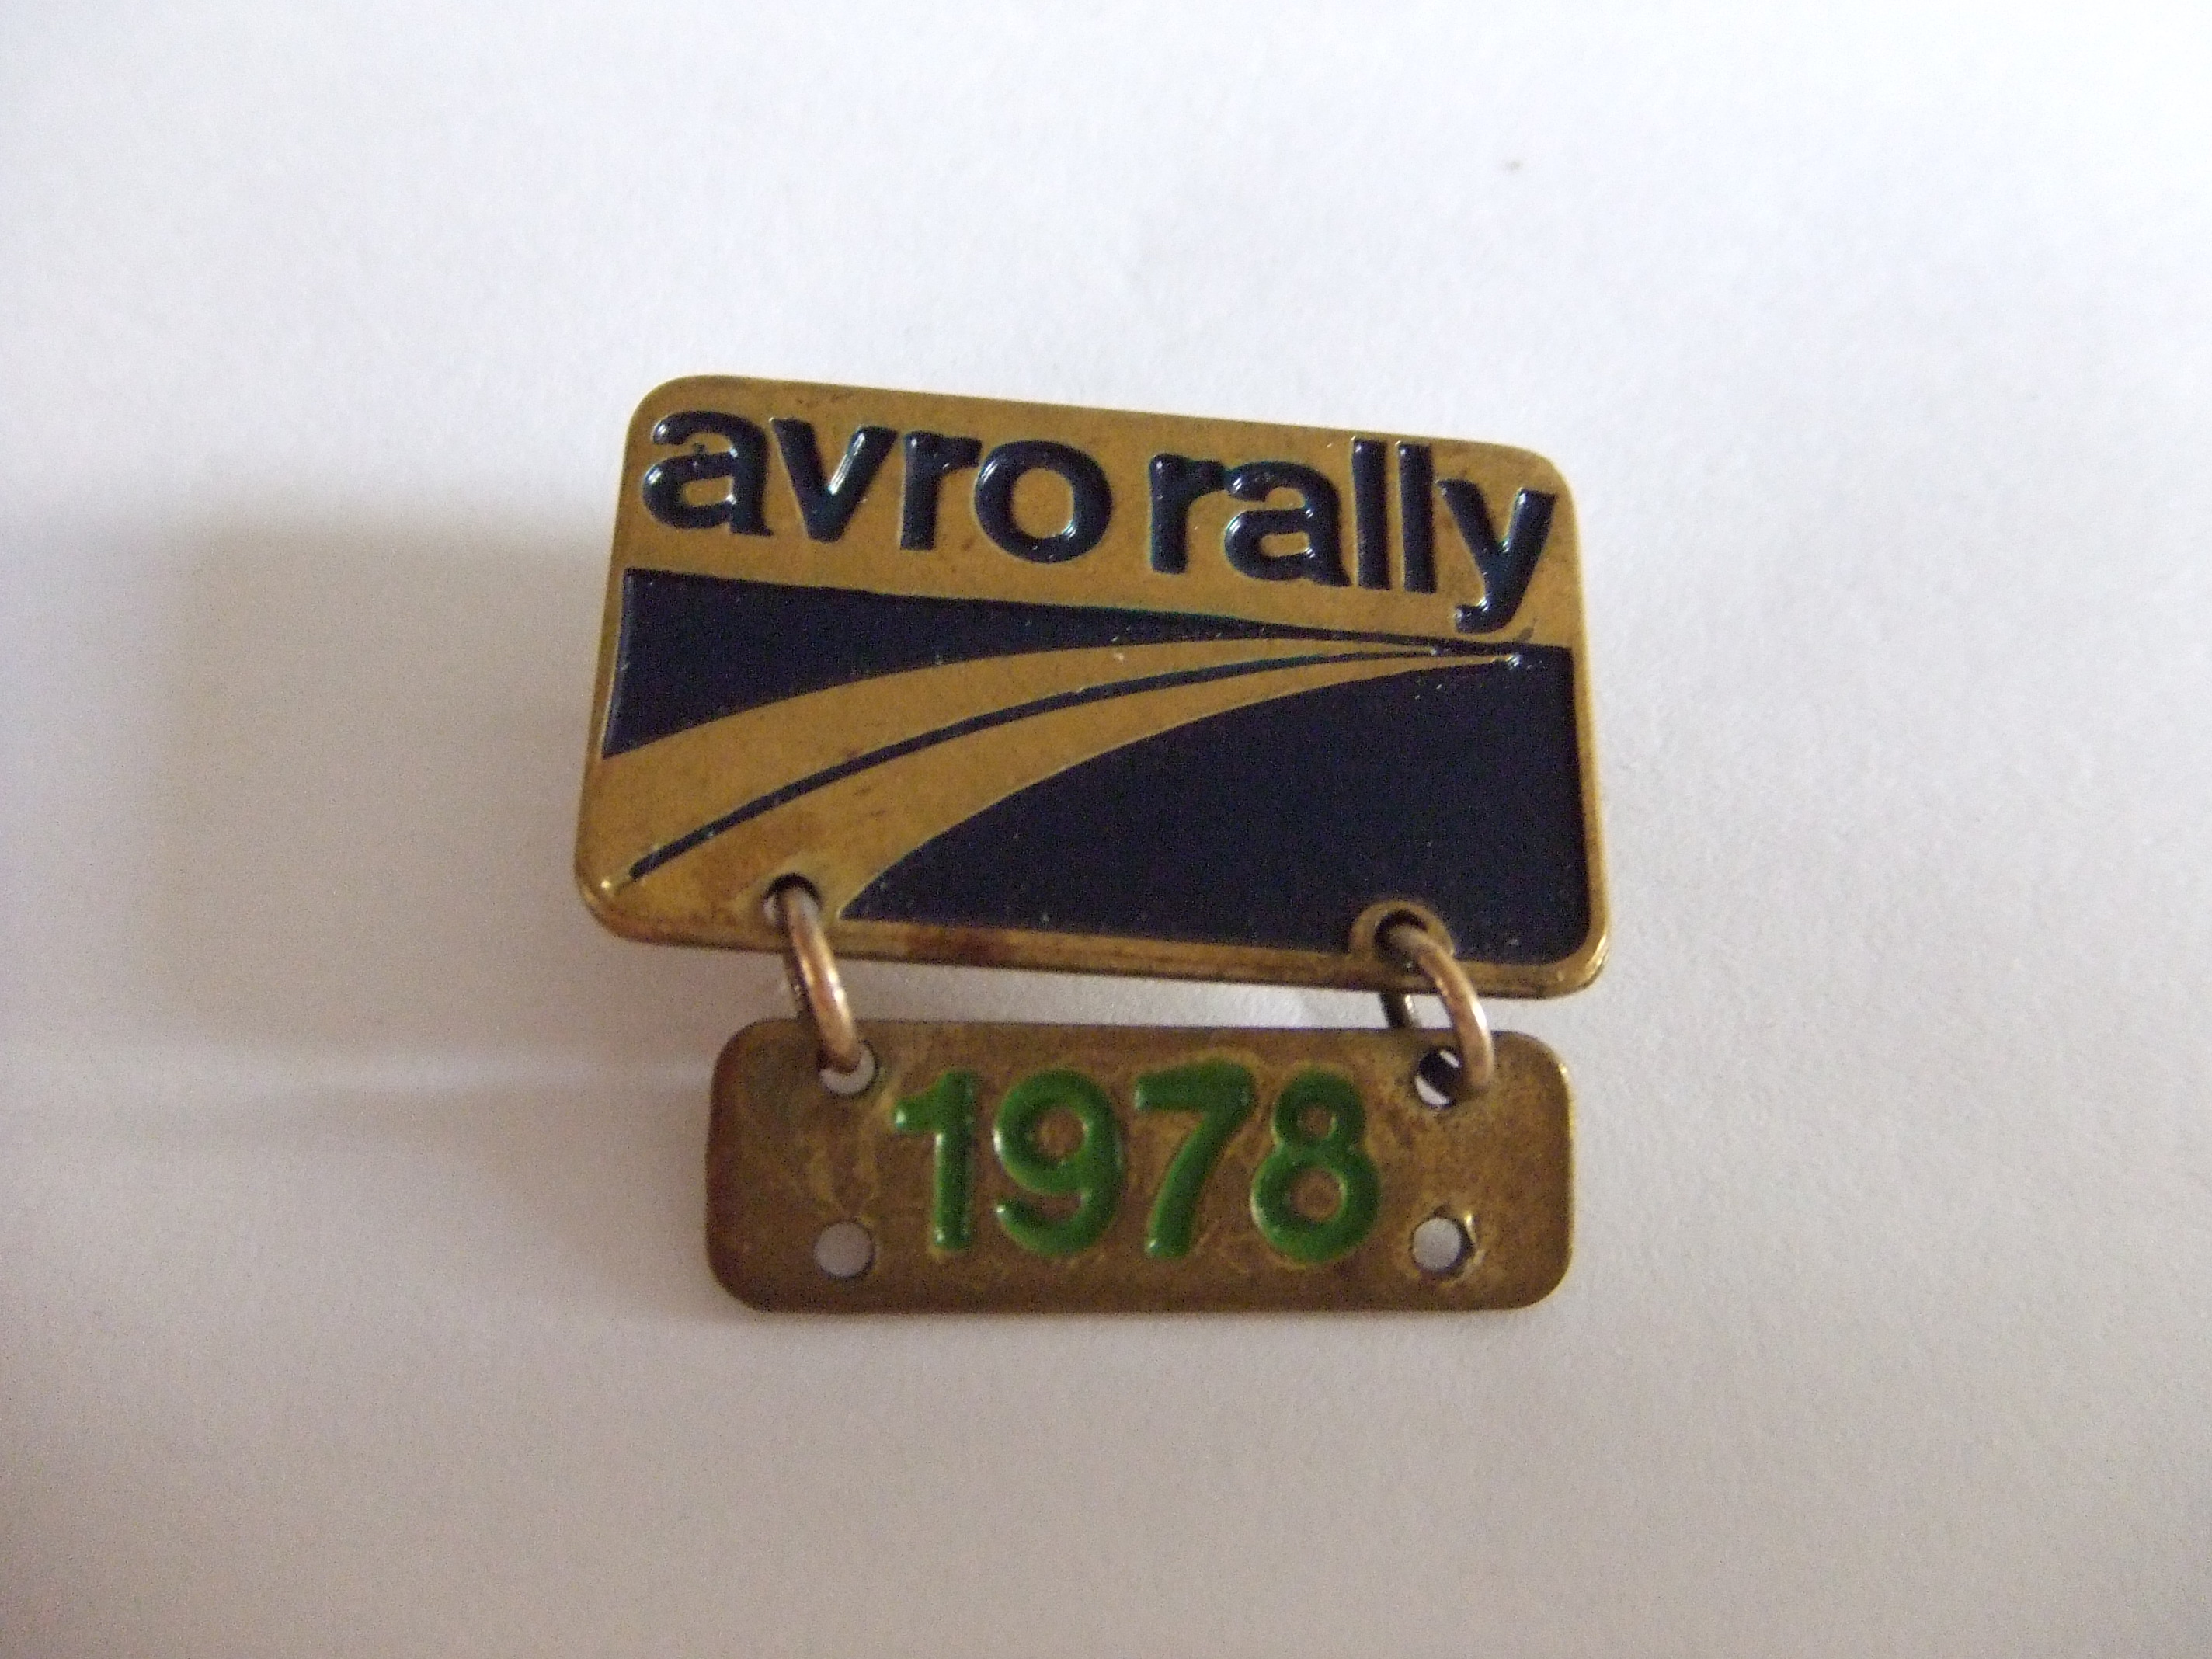 AVRO Rally 1978